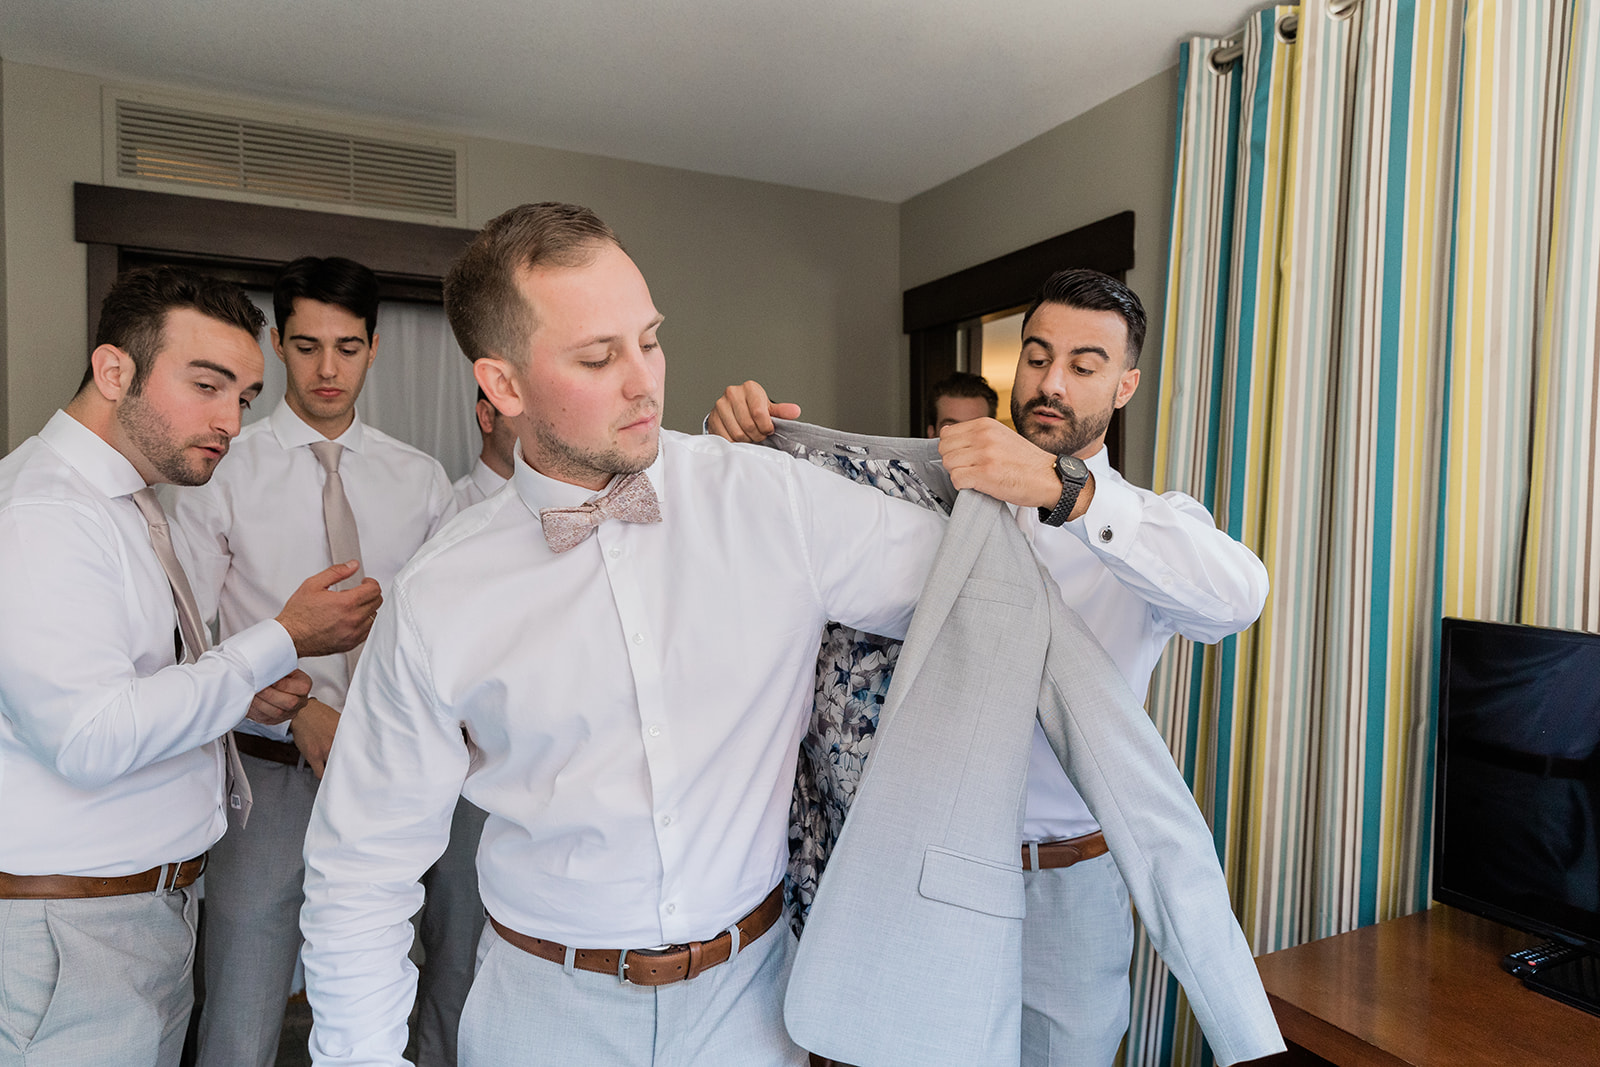 groomsmen putting the jacket on the groom